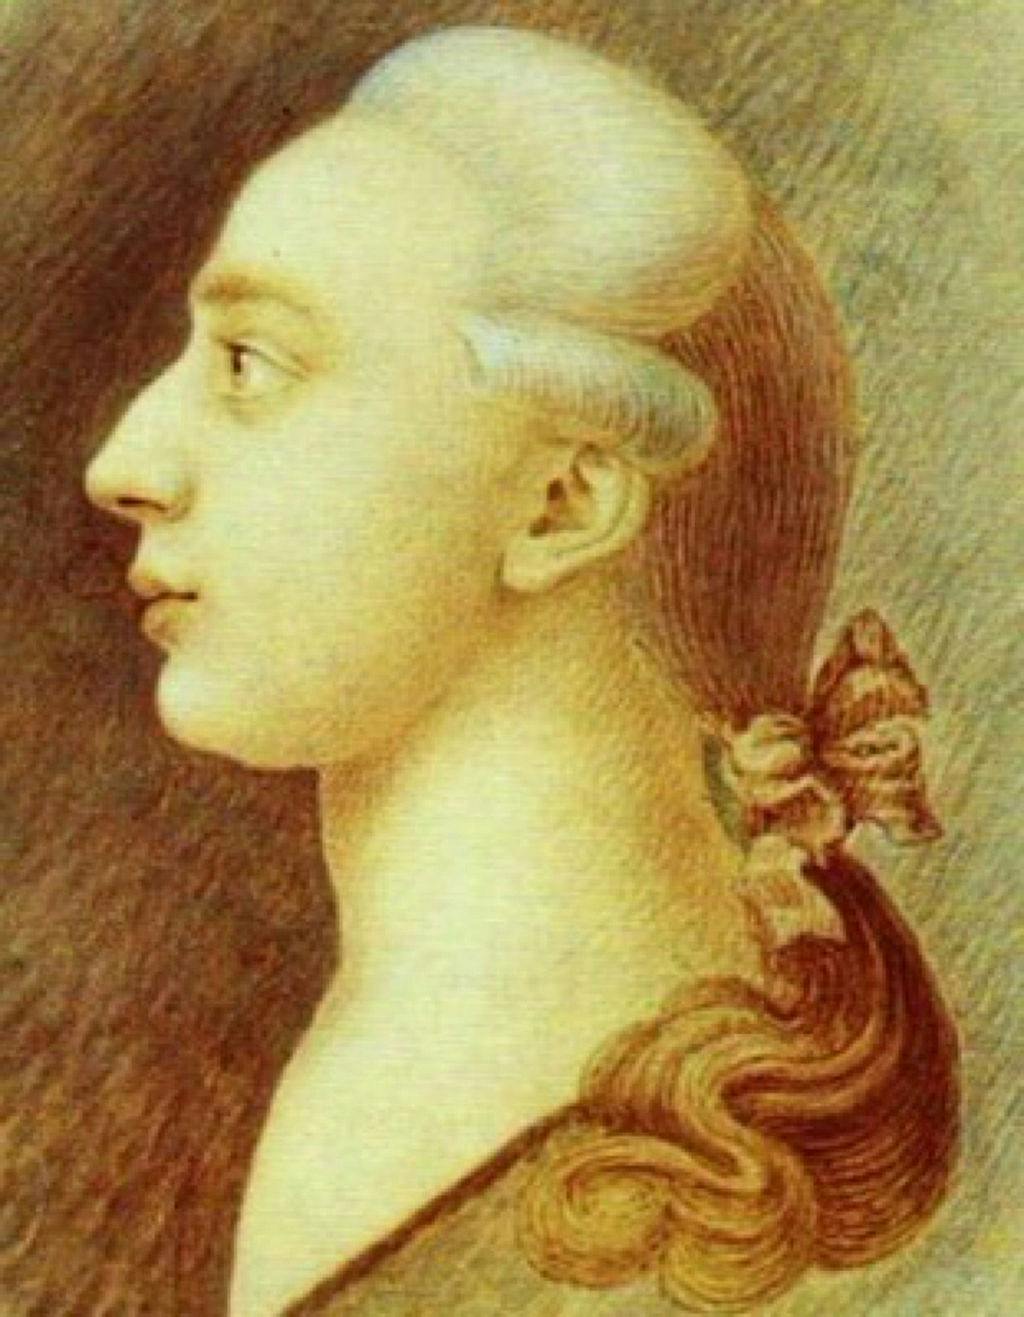 Giacomo Casanova portrait